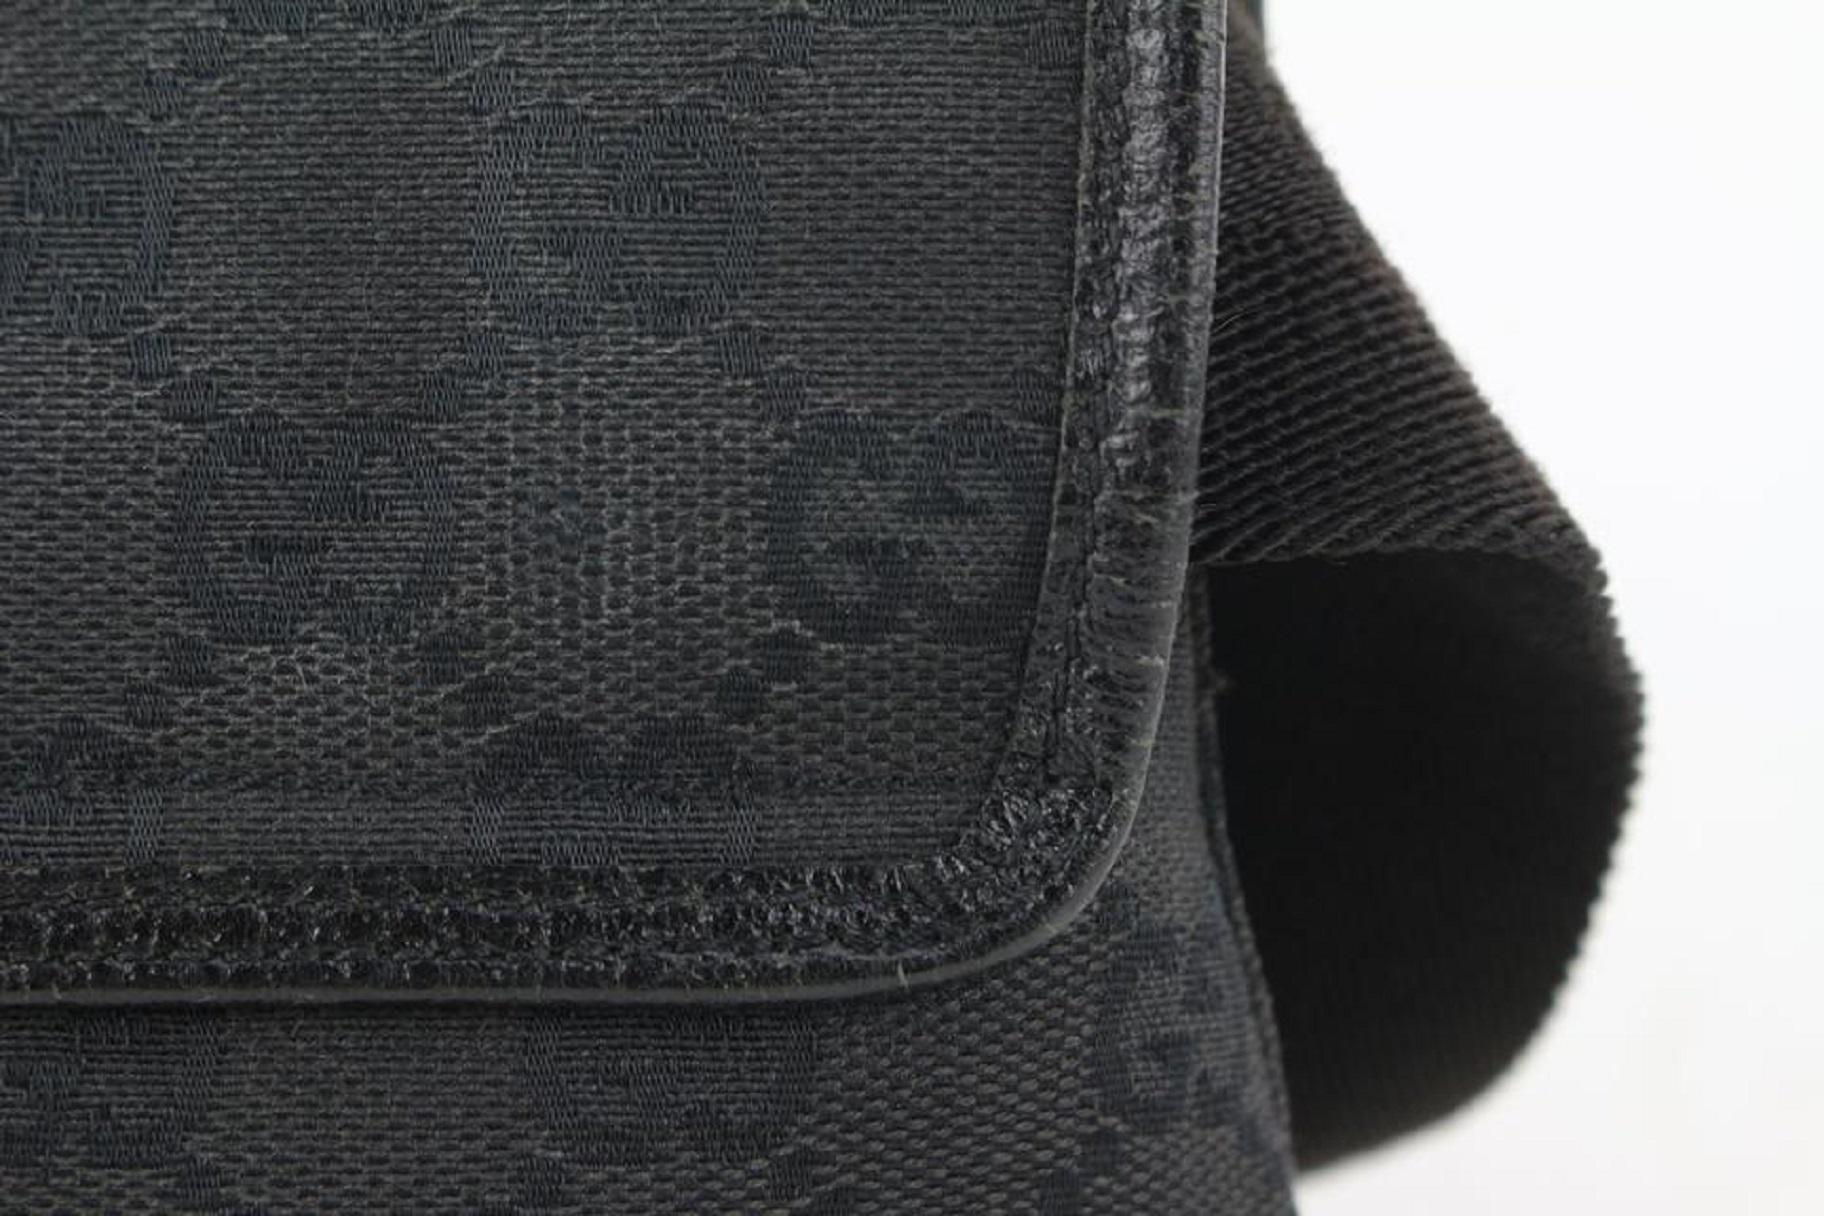 Gucci Black Monogram GG Belt Bag Fanny Pack Waist Pouch 927gk26 For Sale 6